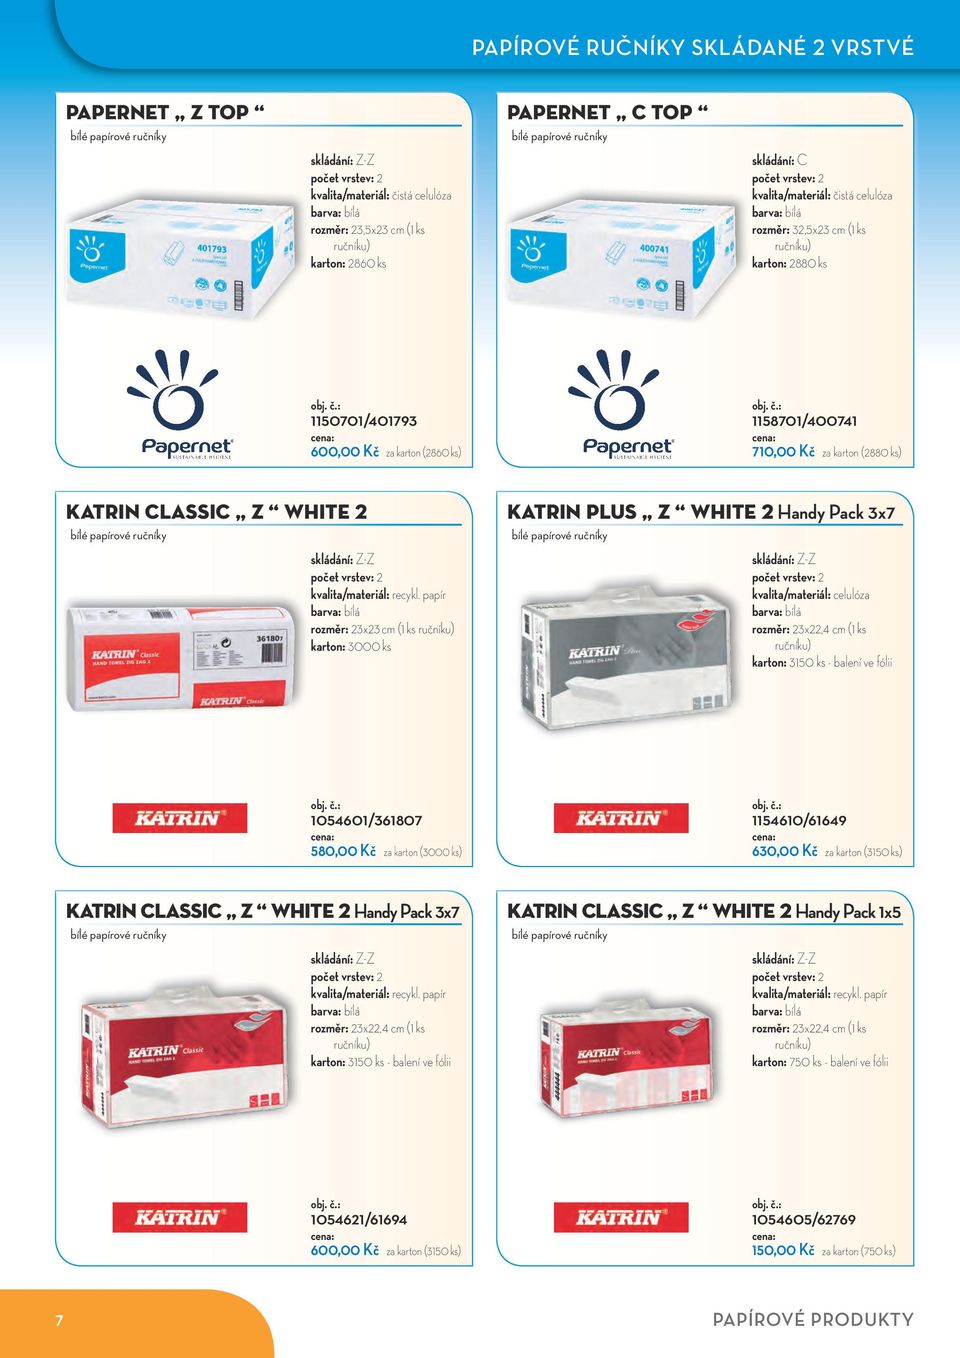 CLASSIC Z WHITE 2 bílé papírové ručníky skládání: Z-Z rozměr: 23x23 cm (1 ks ručníku) karton: 3000 ks KATRIN PLUS Z WHITE 2 Handy Pack 3x7 bílé papírové ručníky skládání: Z-Z kvalita/materiál: